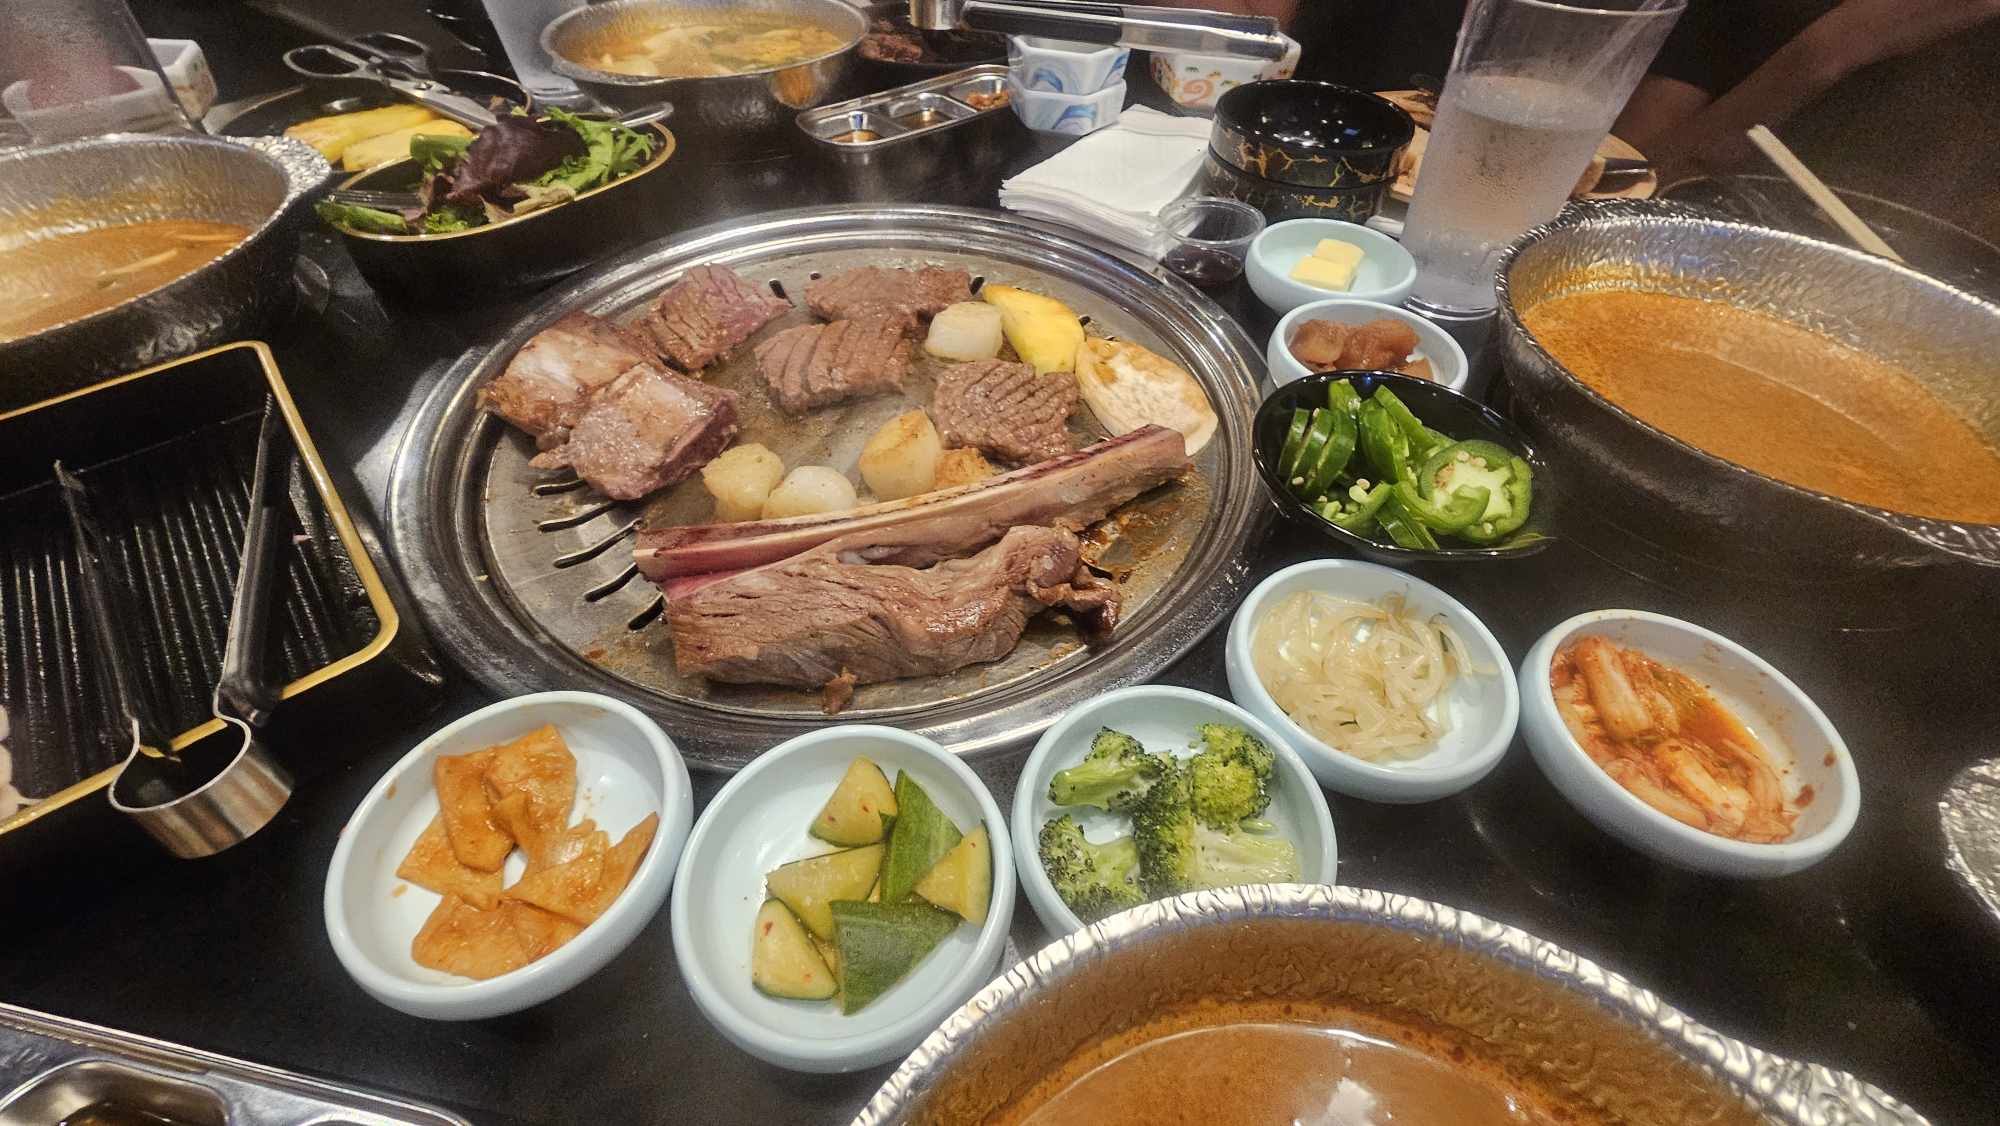 The Hungry Cow in Fremont serves Korean BBQ and Shabu-Shabu hotpot for dinner. Taken on June 8.